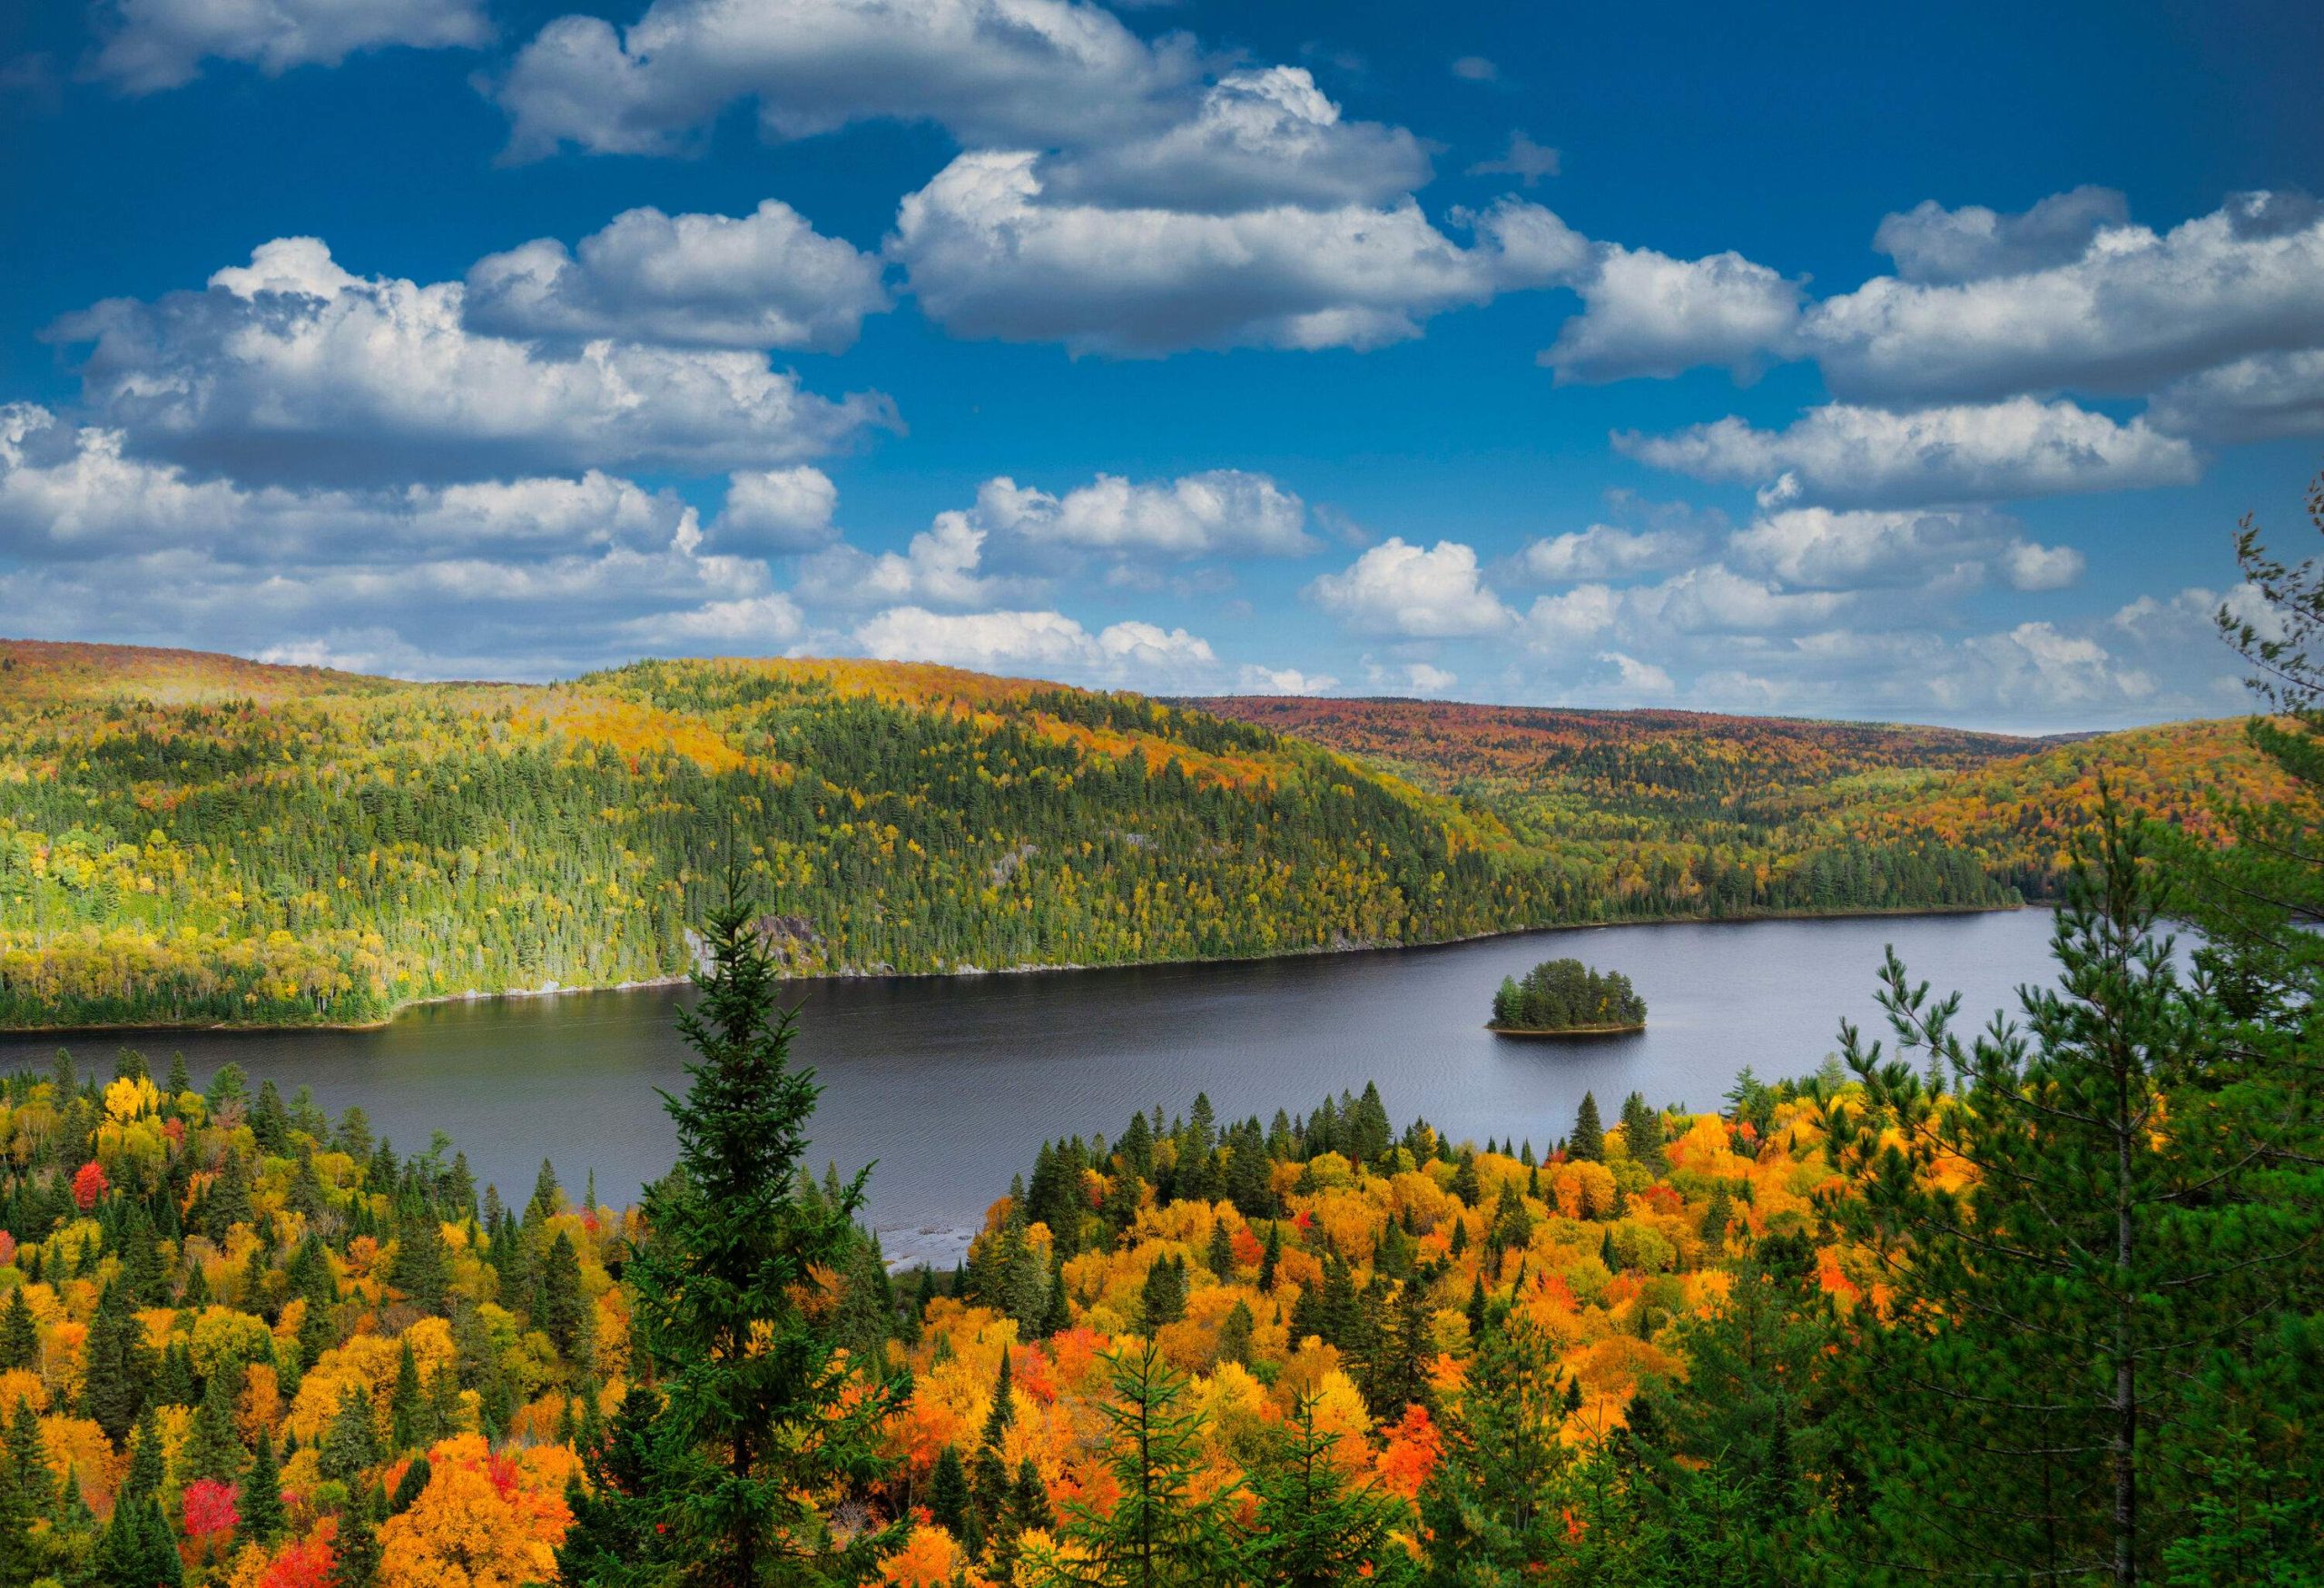 A calm lake across a landscape covered in vibrant fall foliage.